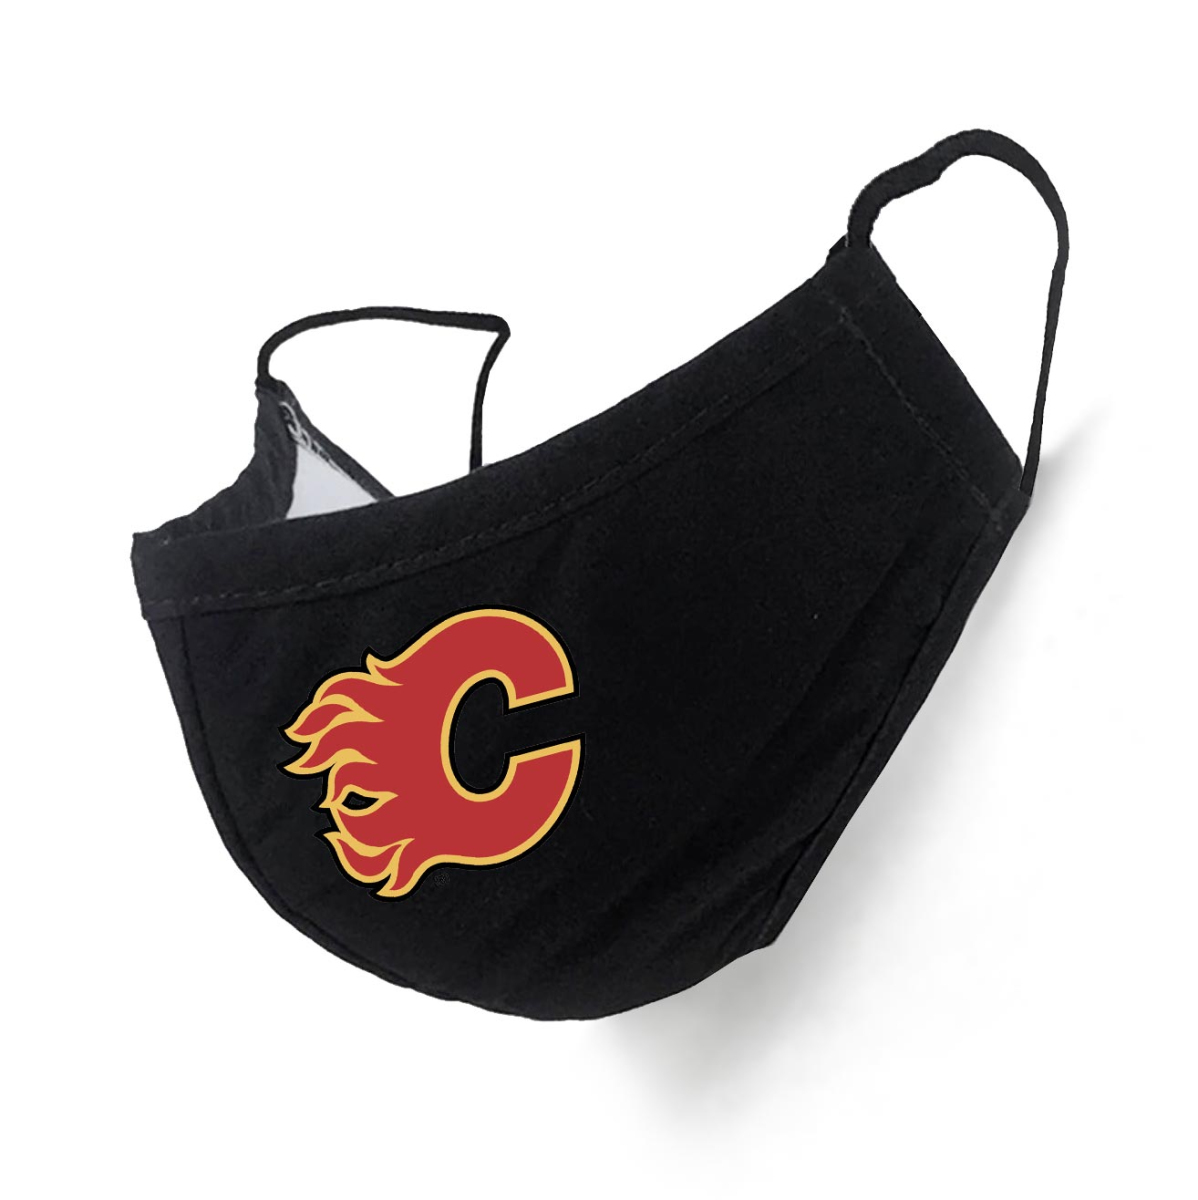 Calgary Flames rouška black